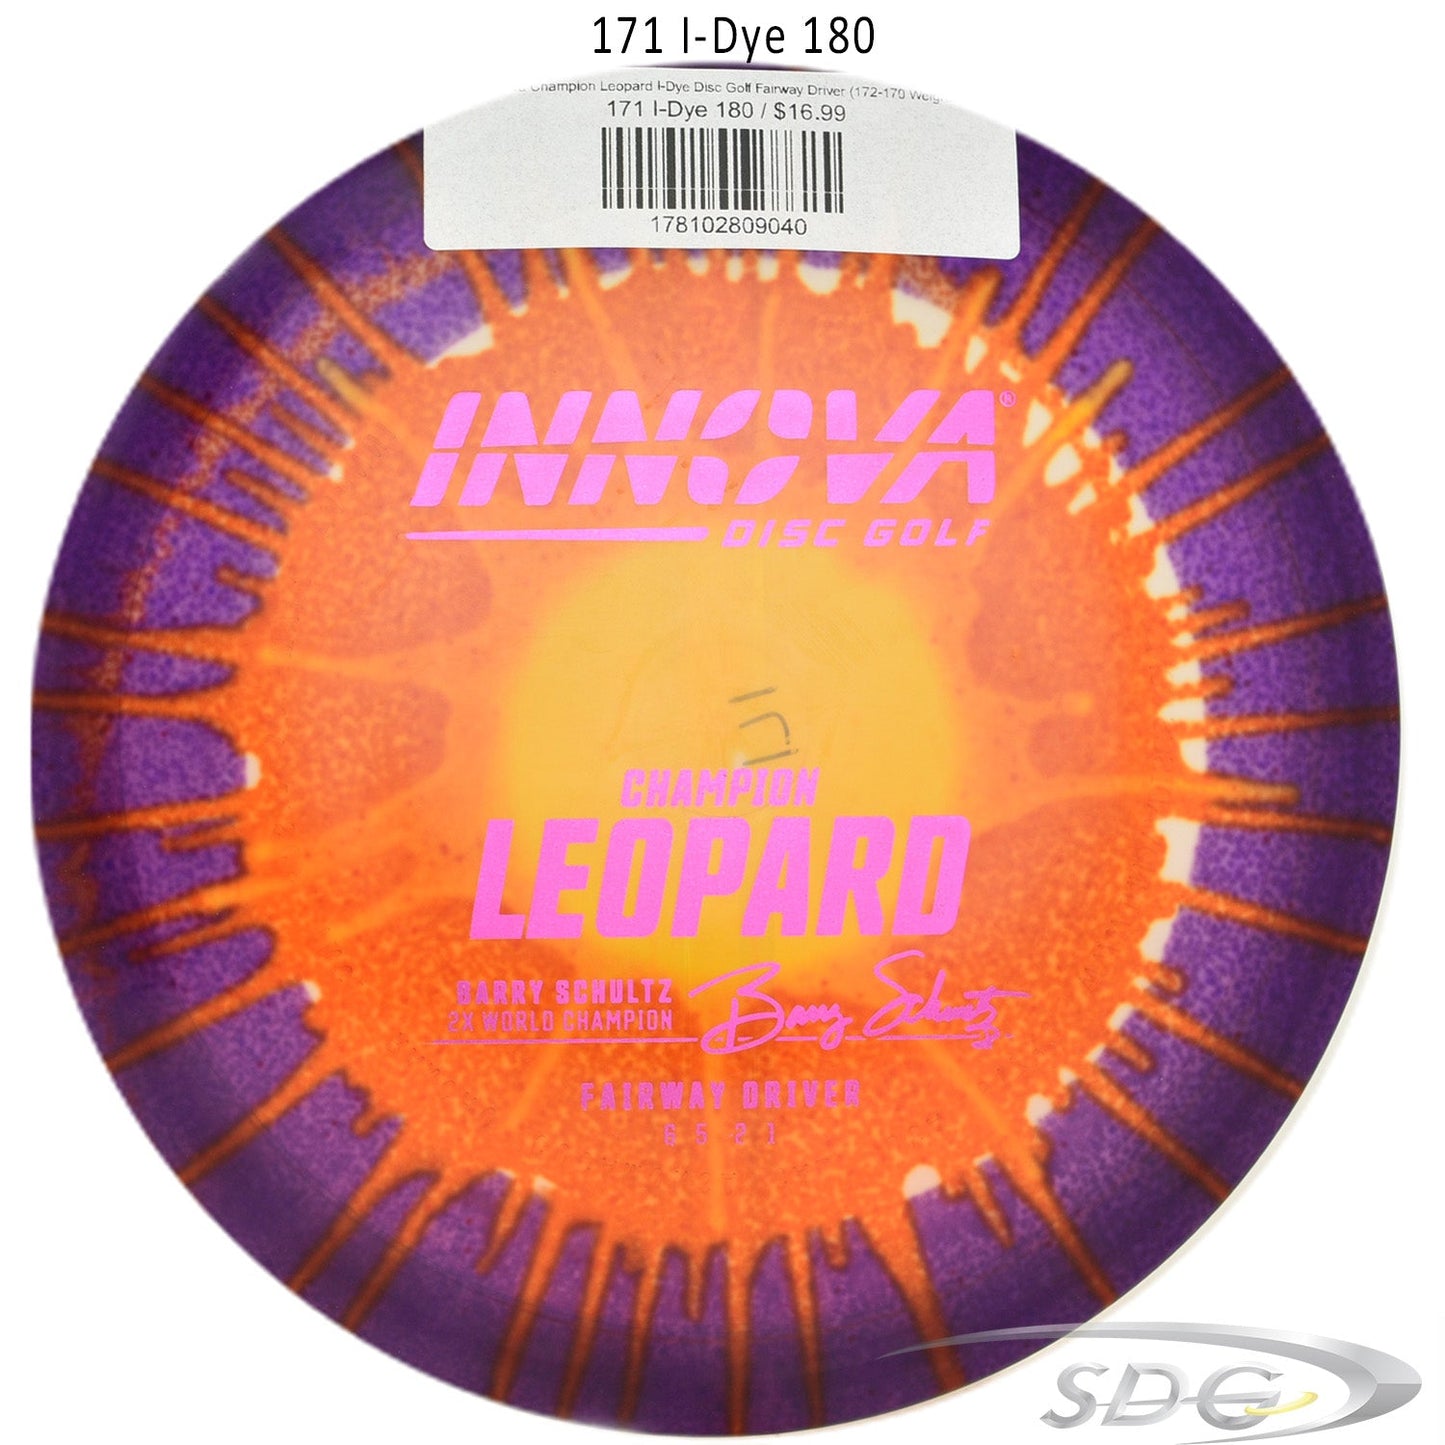 innova-champion-leopard-i-dye-disc-golf-fairway-driver 171 I-Dye 180 